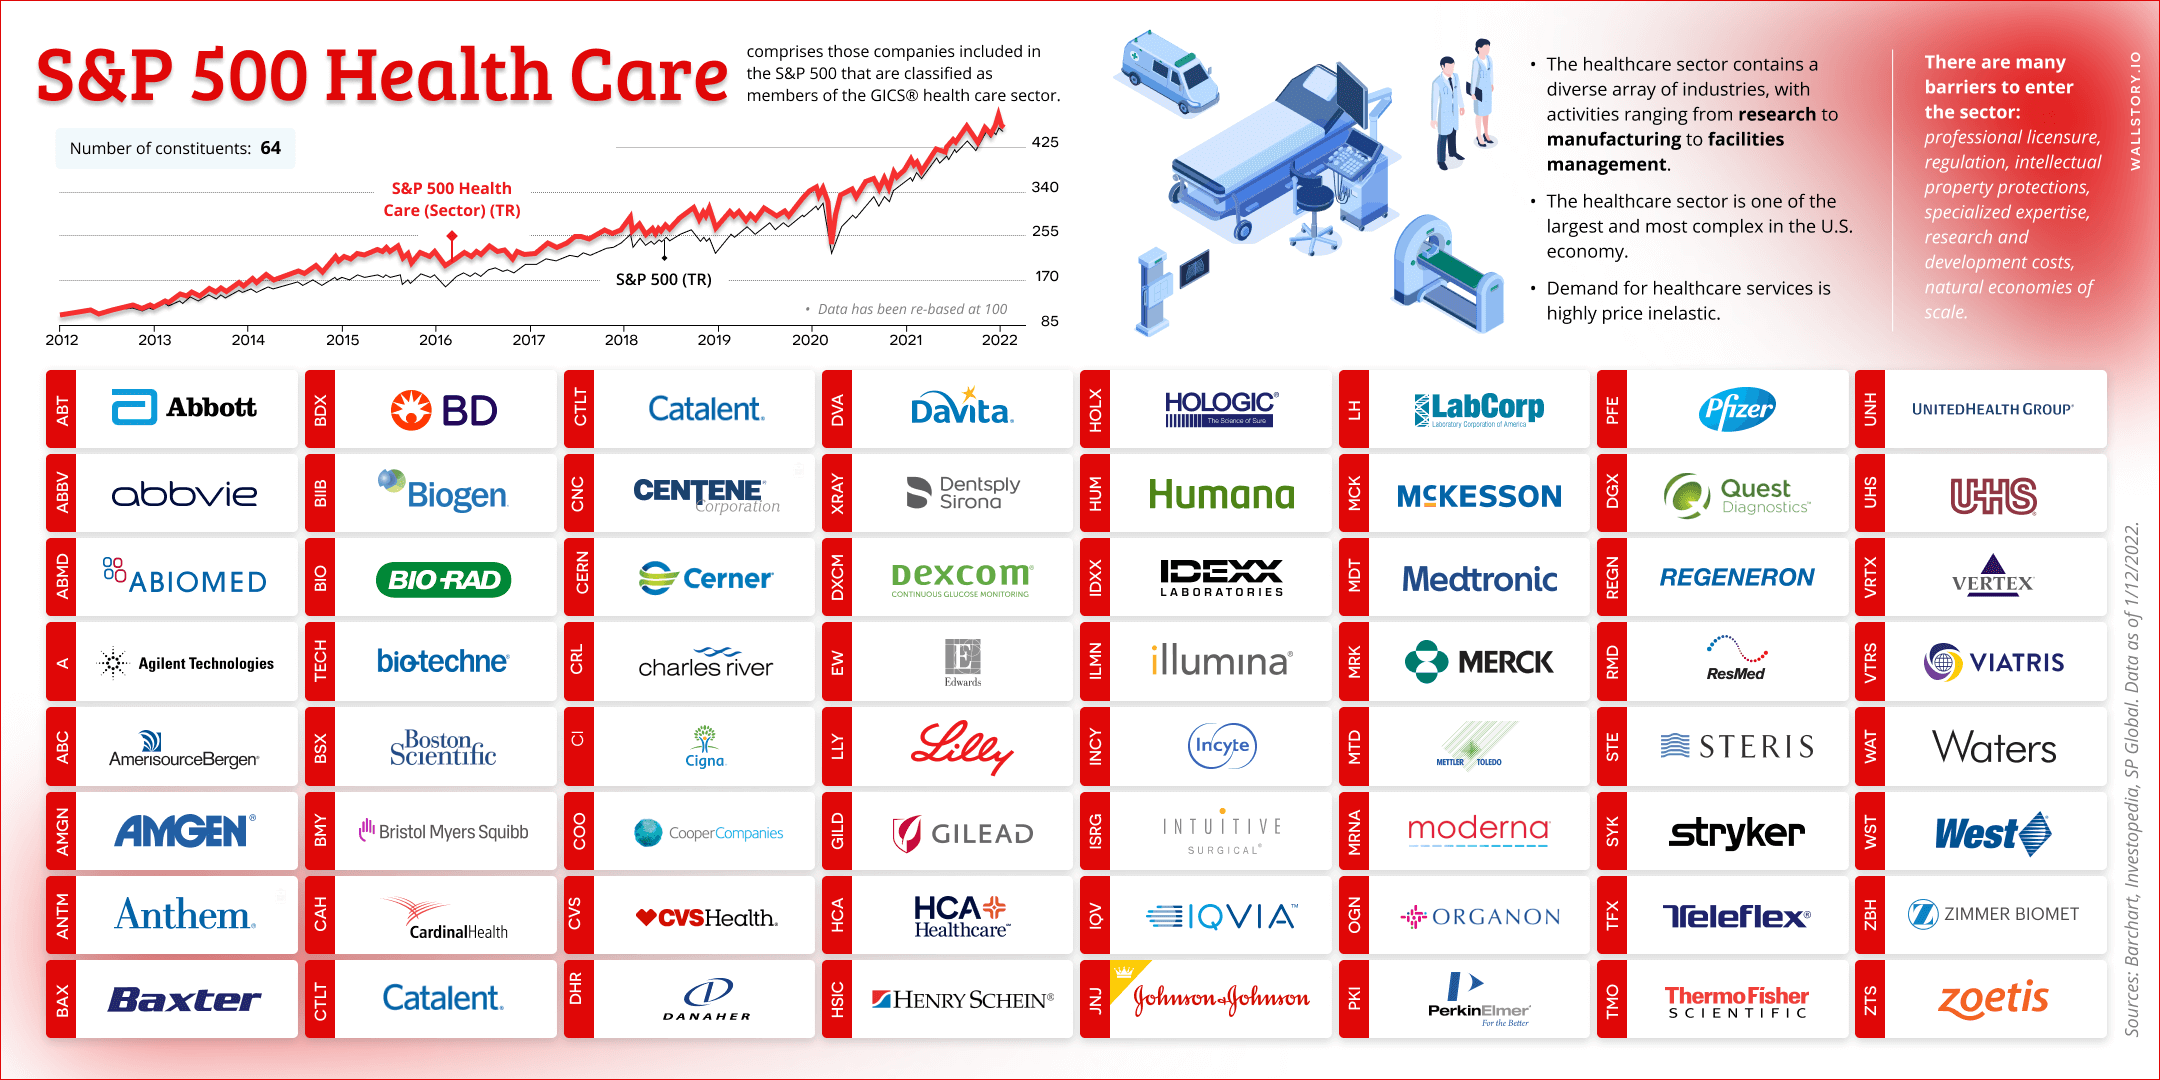 S&P 500 Health Care